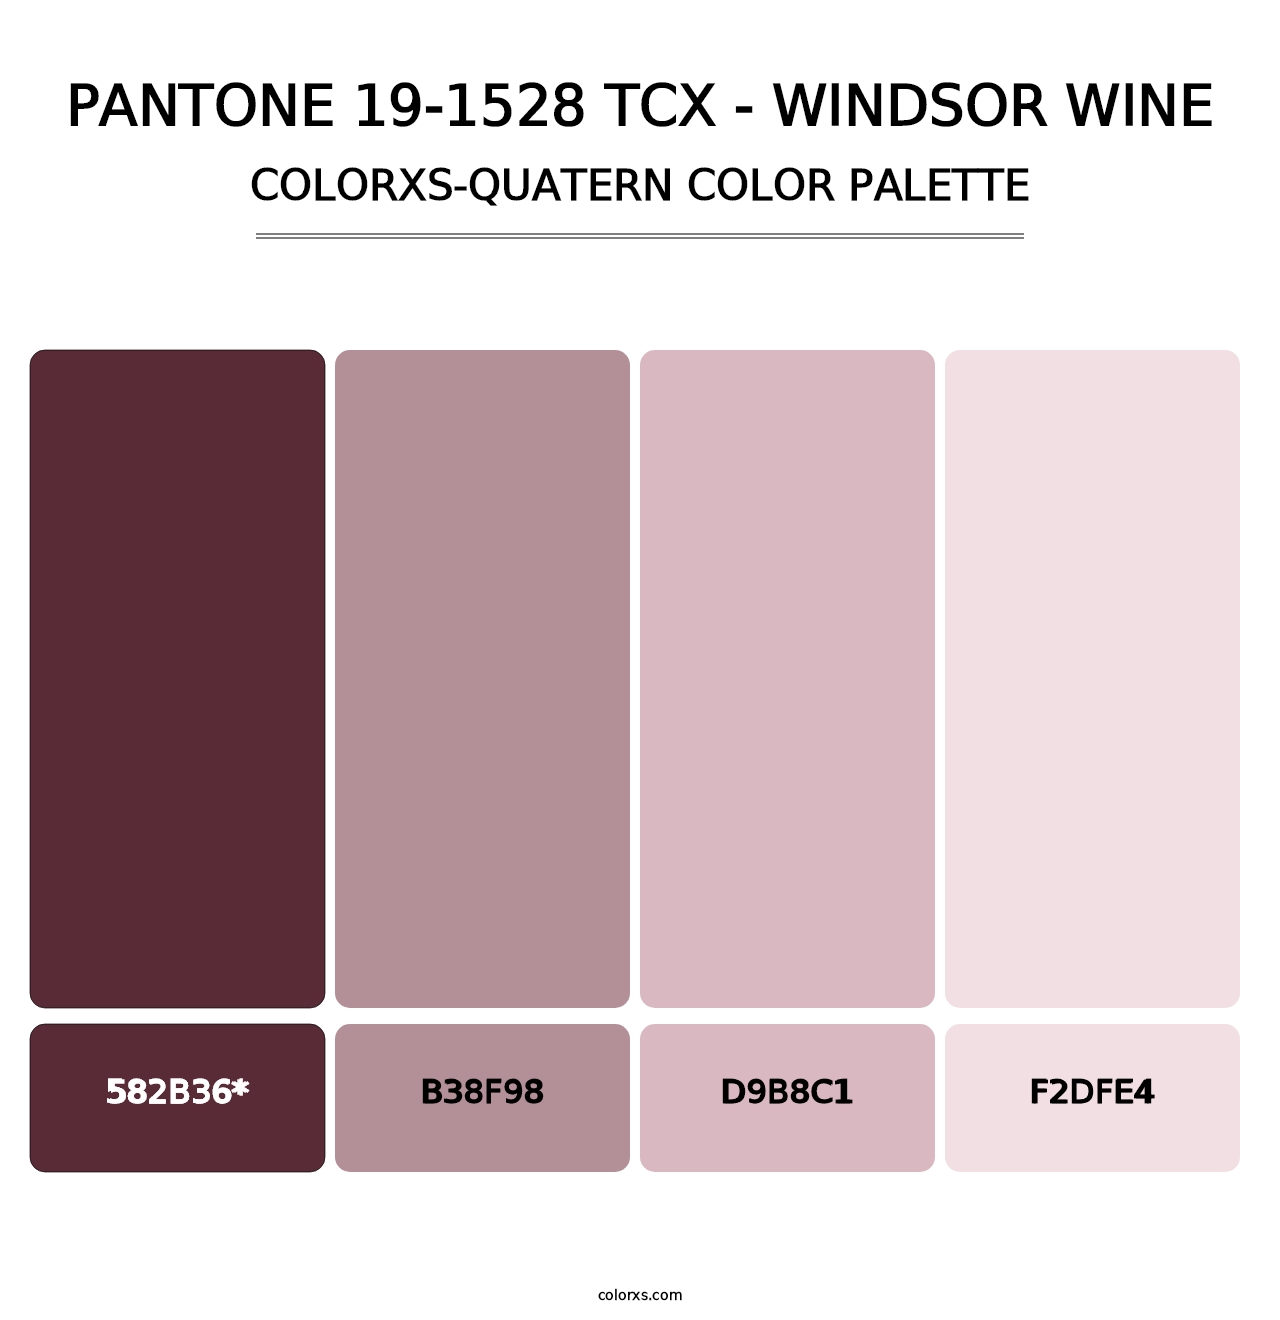 PANTONE 19-1528 TCX - Windsor Wine - Colorxs Quatern Palette